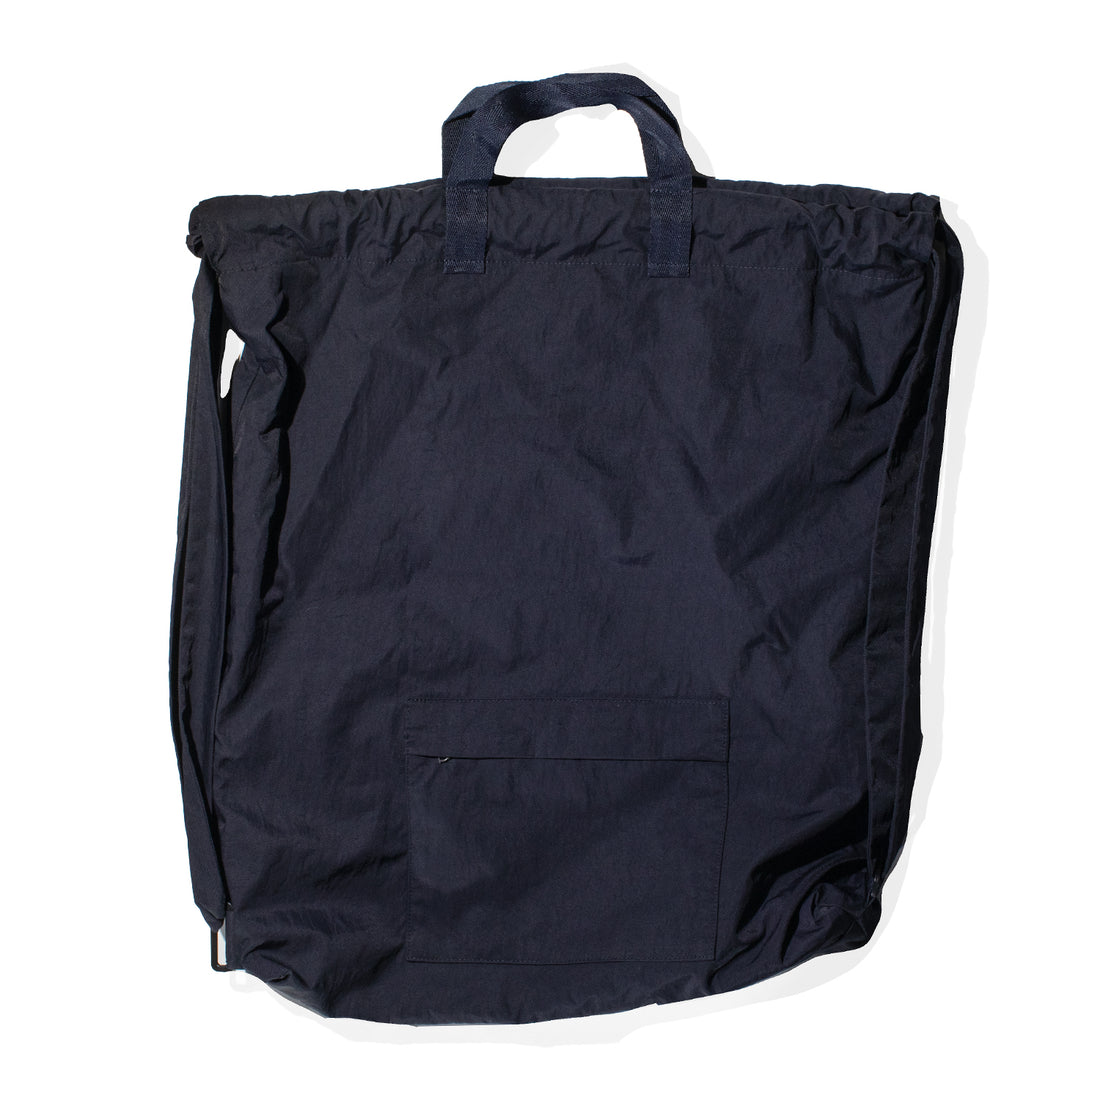 Grei Manifold Bag in Midnight Blue